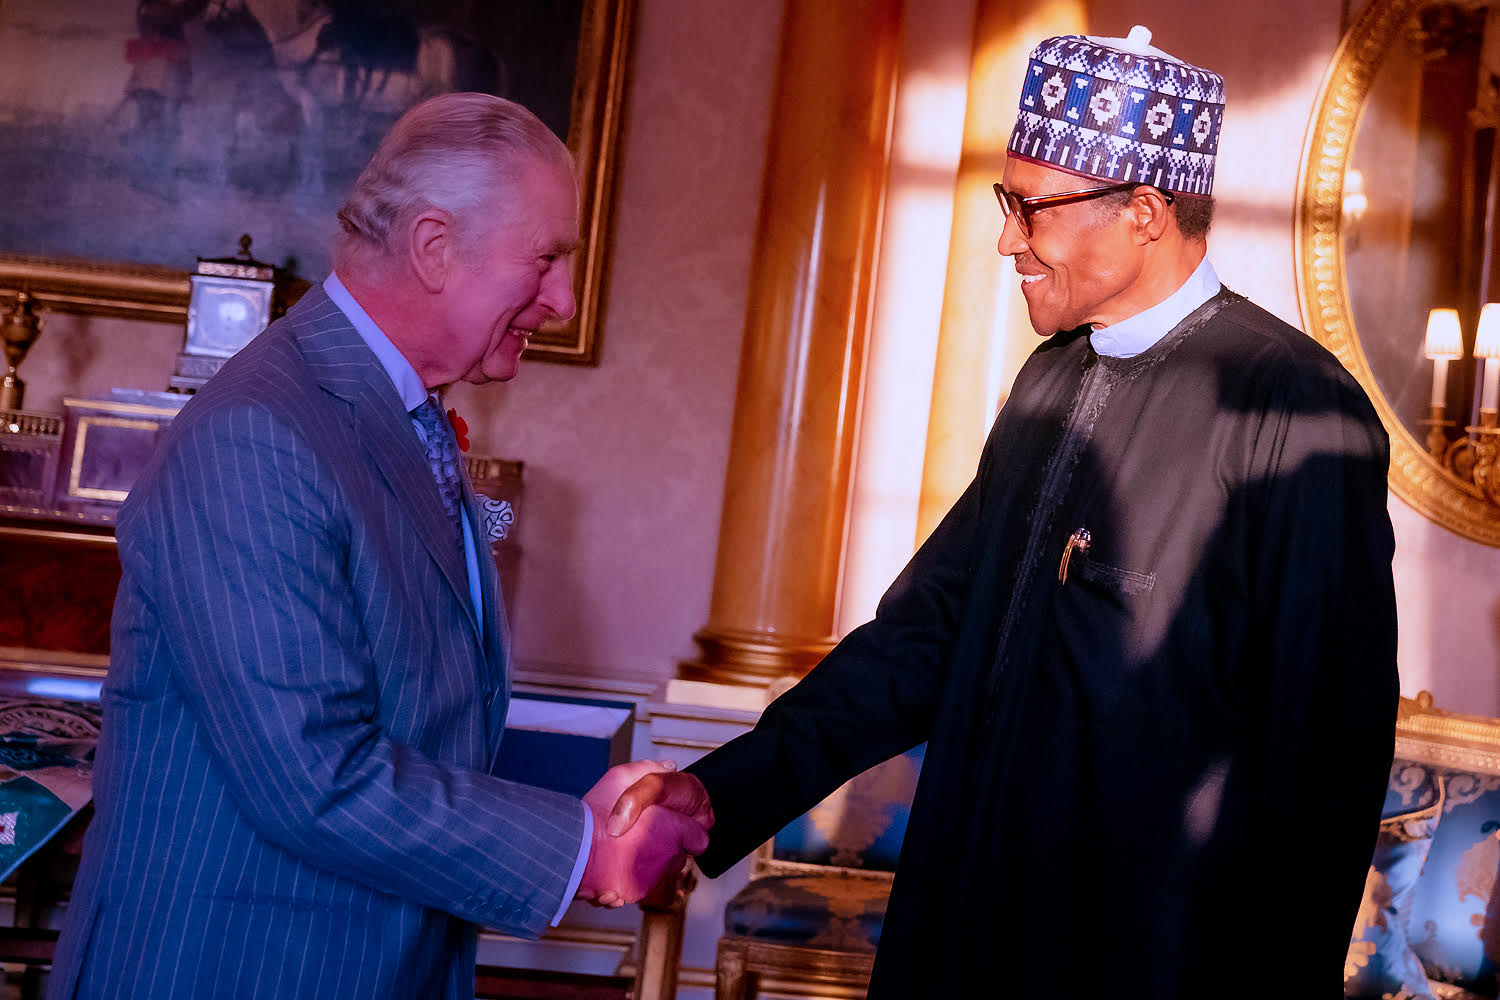 Buhari meets King Charles III at Buckingham Palace in London